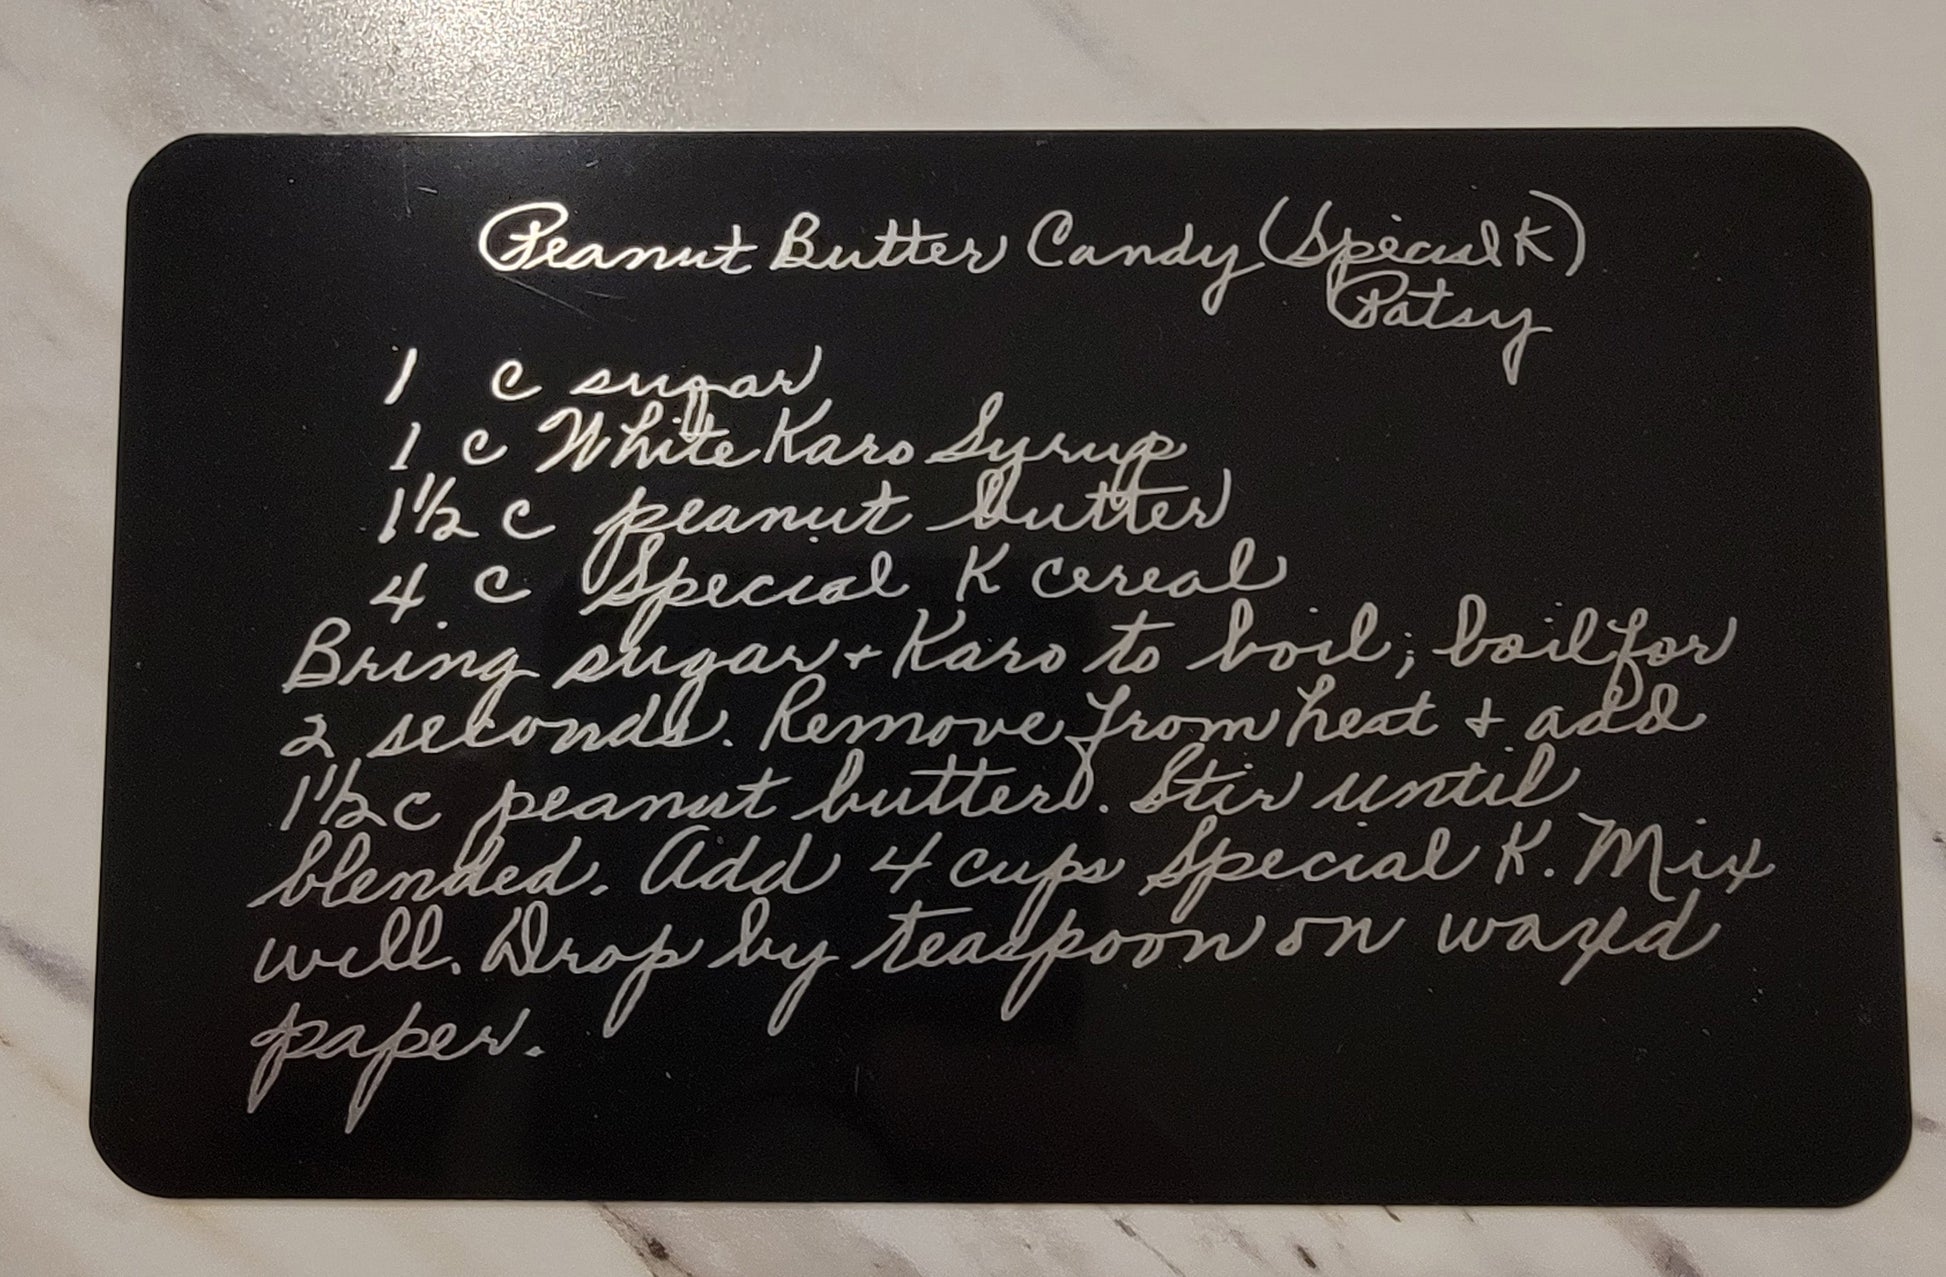 ThinkEngraved Cutting Board Engraved Handwritten Recipe Metal Card - Personalized Grandma's Recipe Card